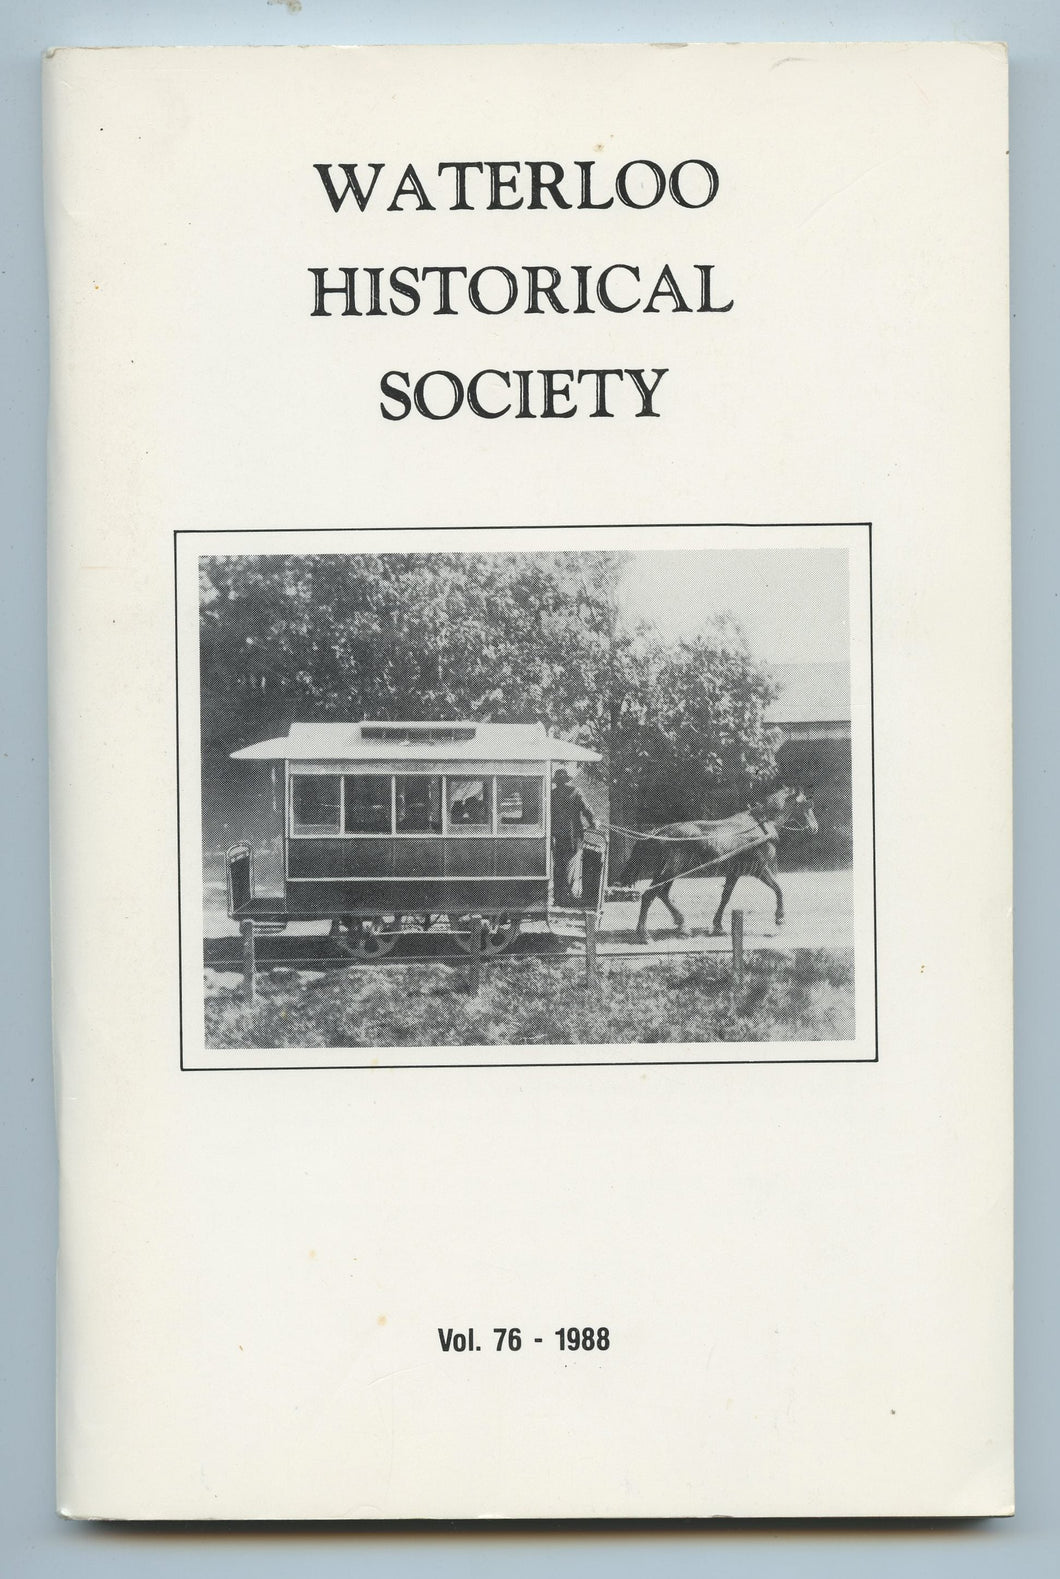 Waterloo Historical Society Vol. 76 - 1988